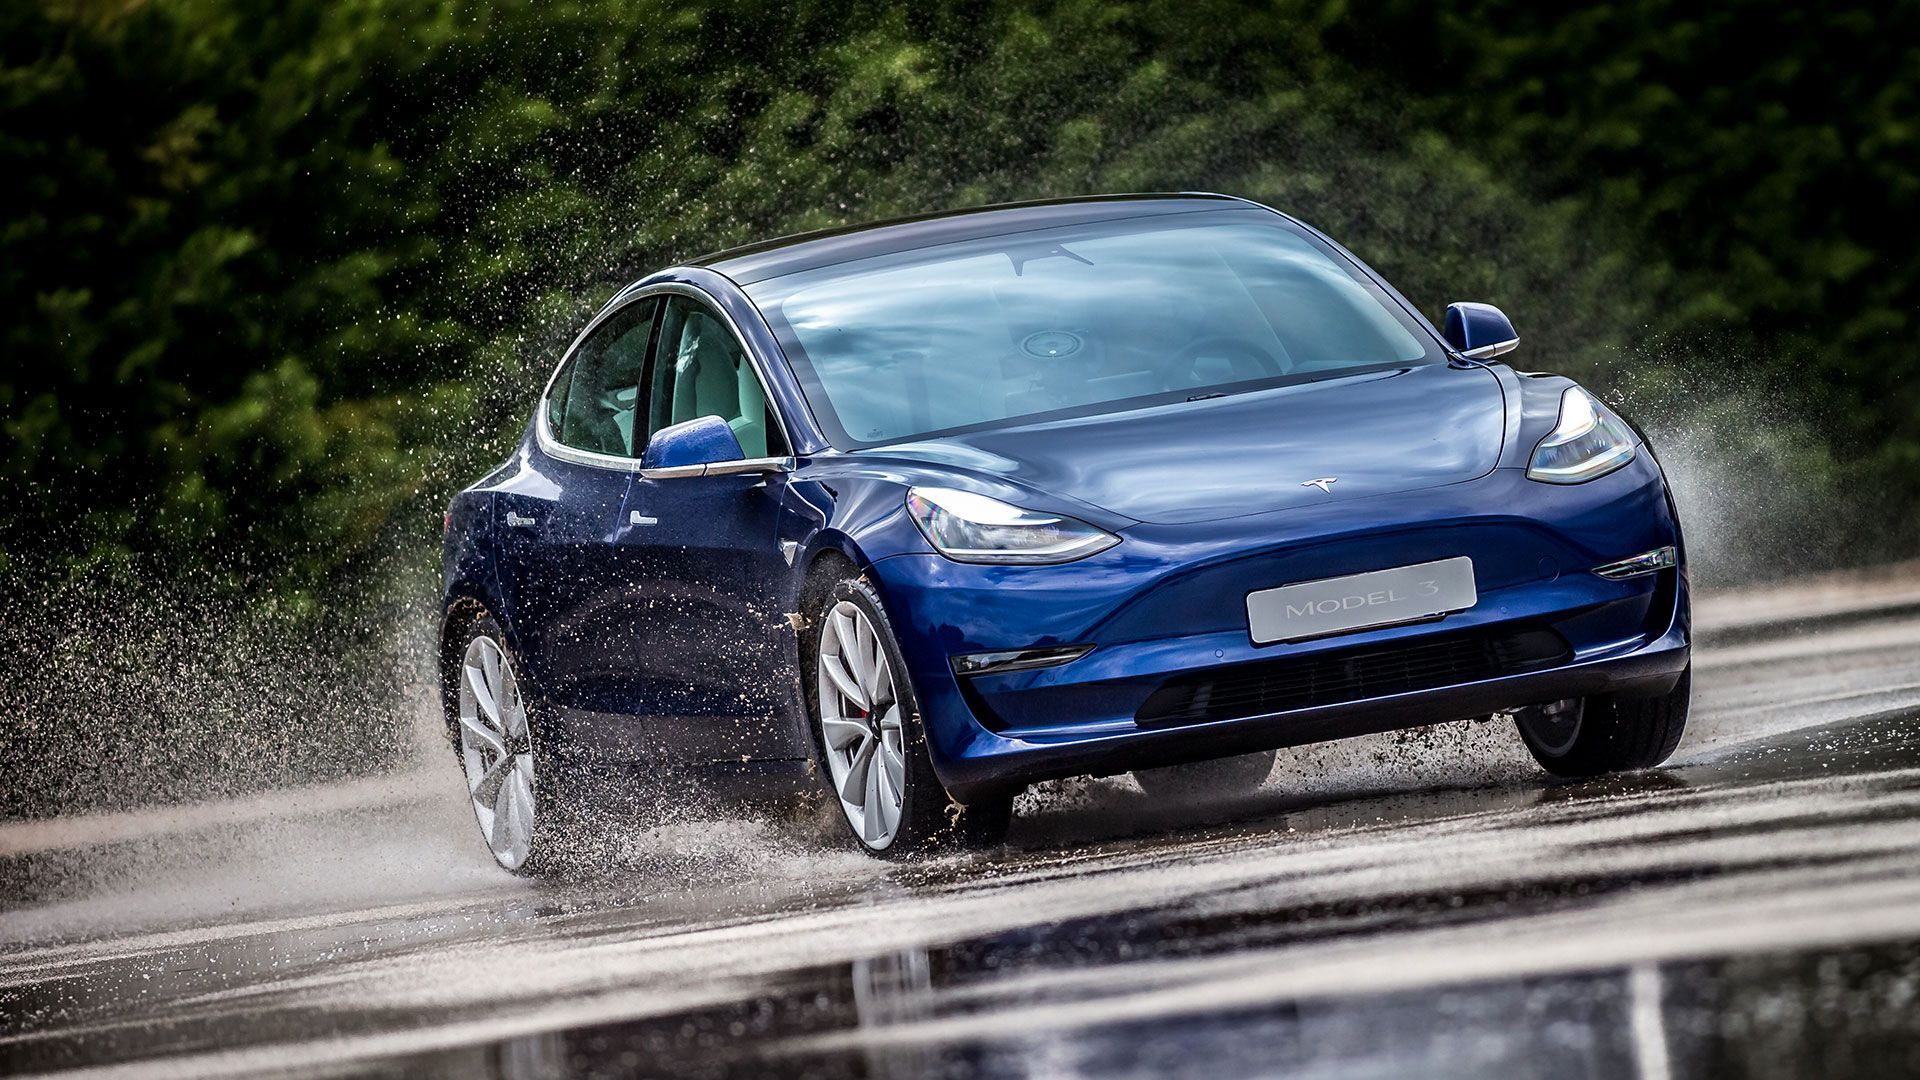 Tesla Model 3 Dominates UK With 1 in 6 New Car Registrations in April